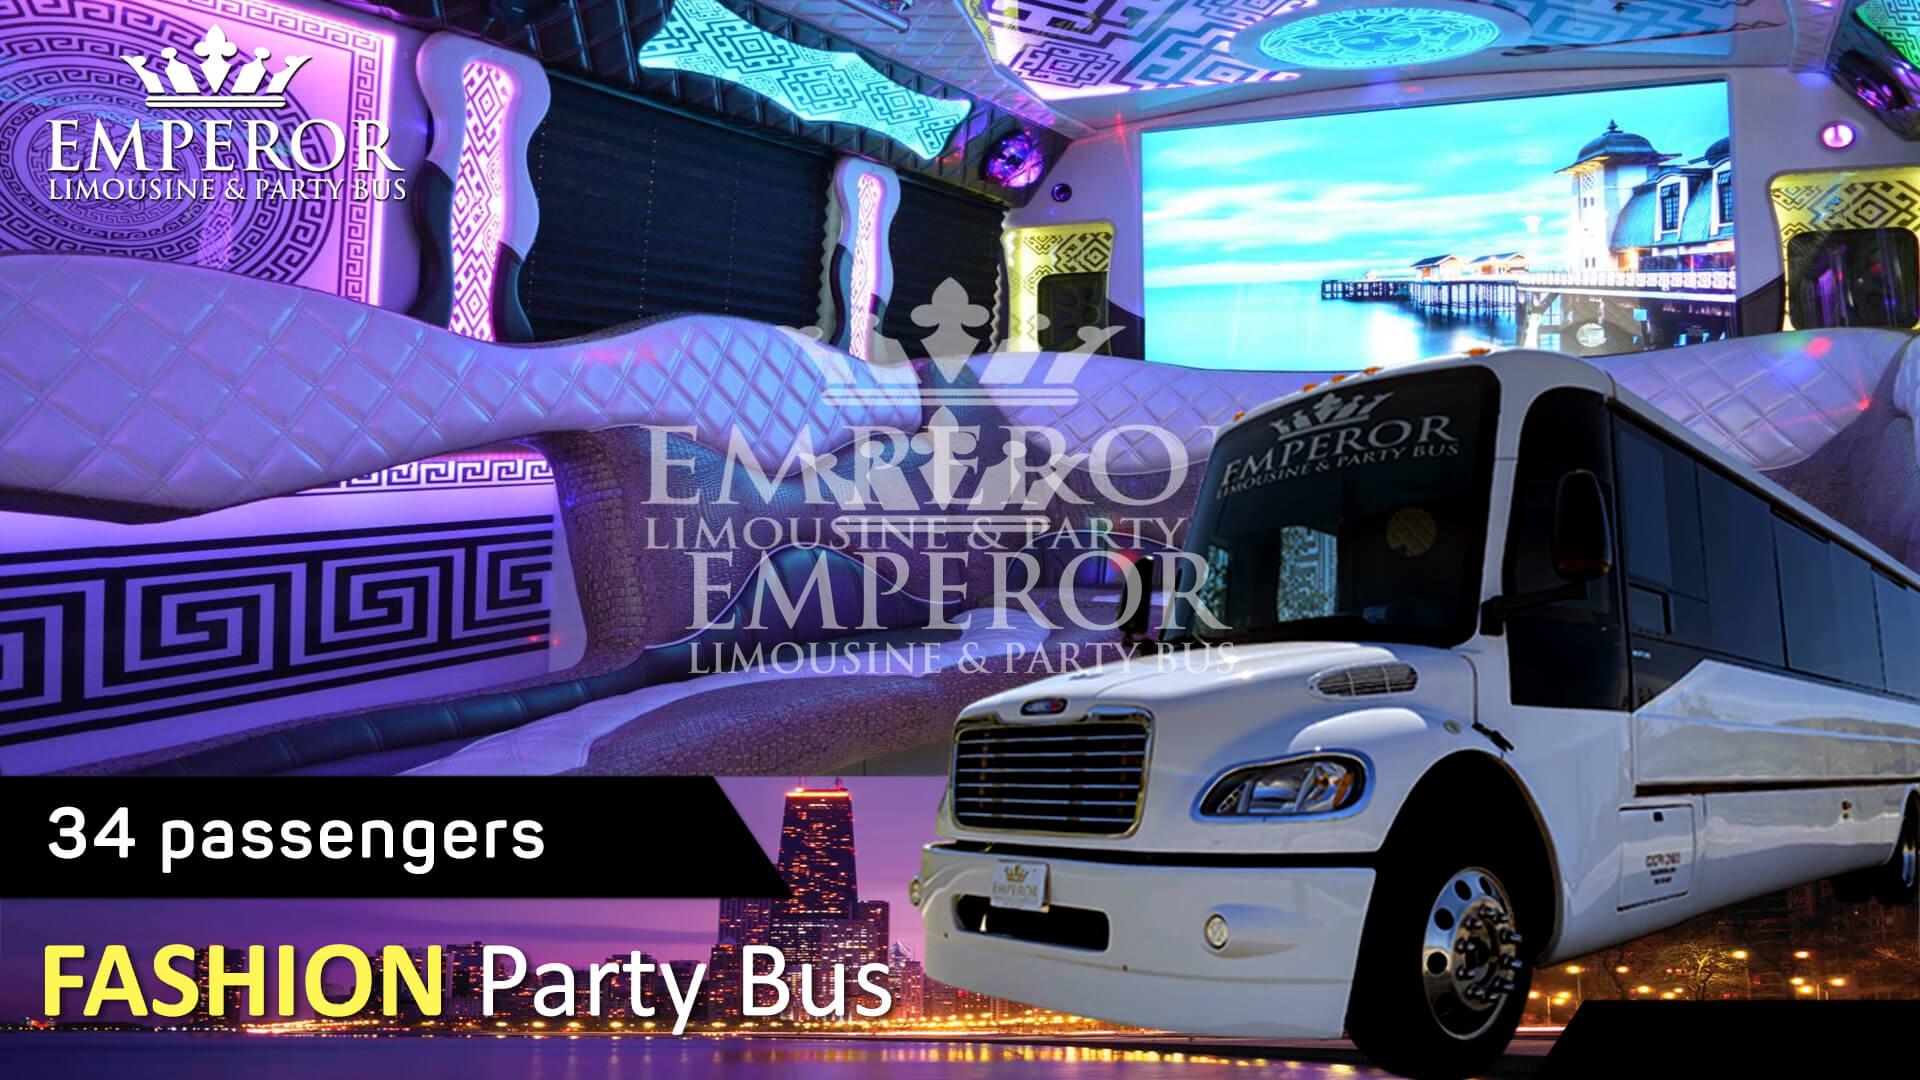 Bachelorette Party bus service - Fashion Edition